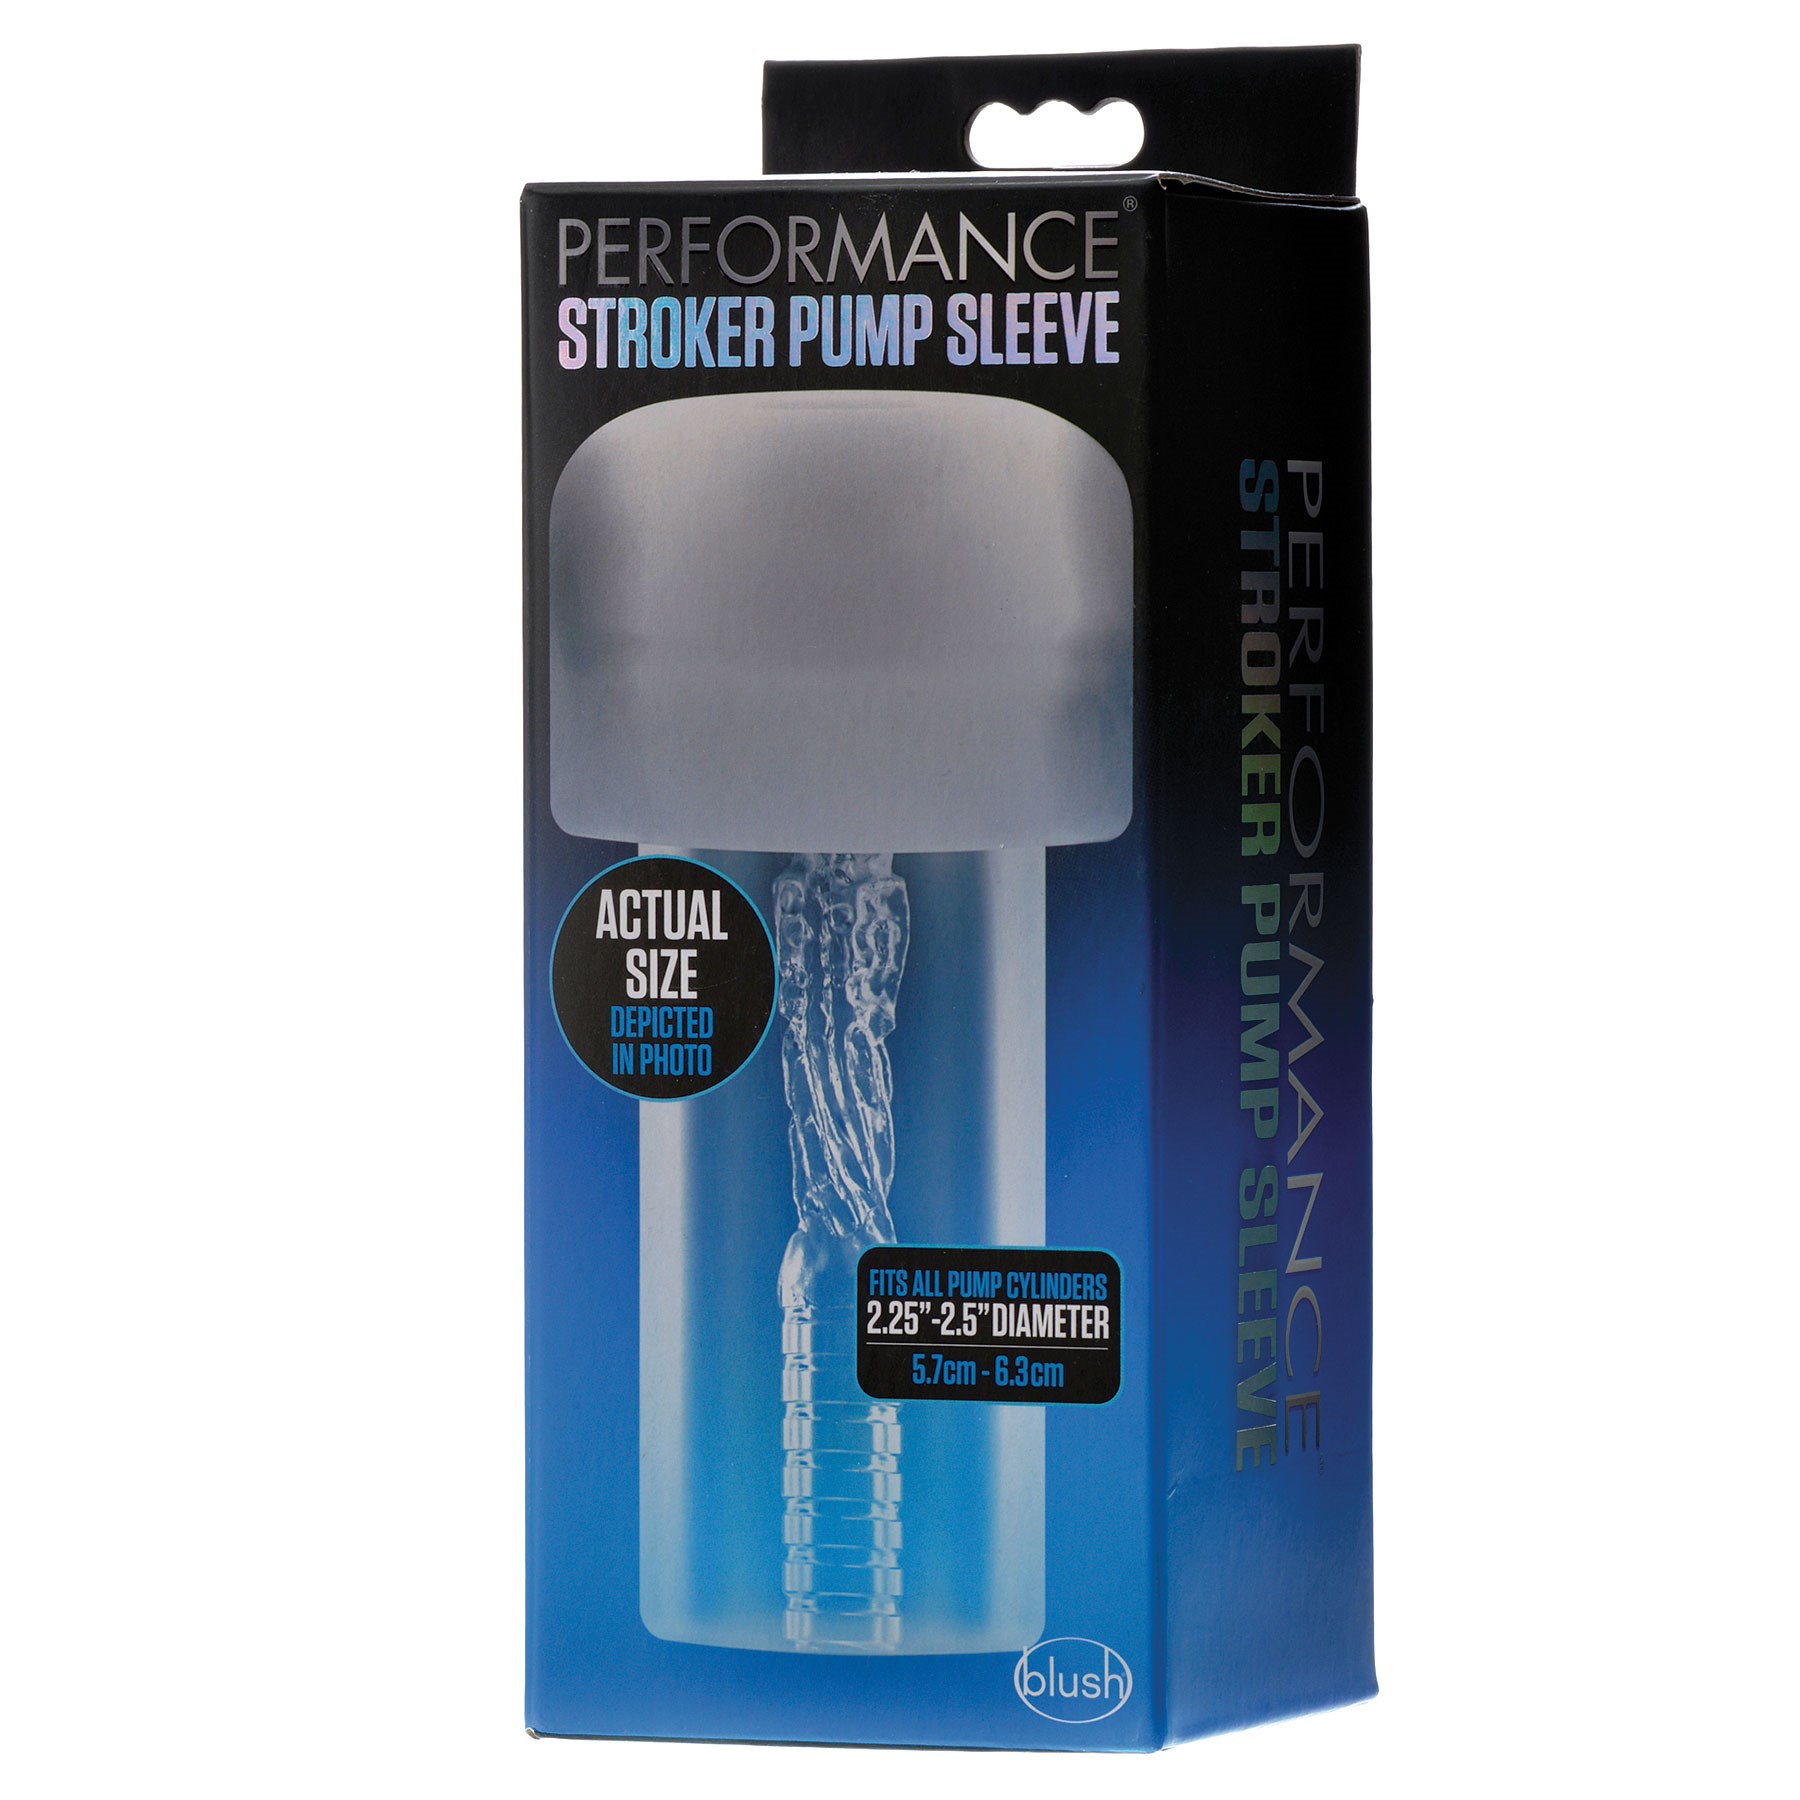 Performance Stroker Pump Sleeve box